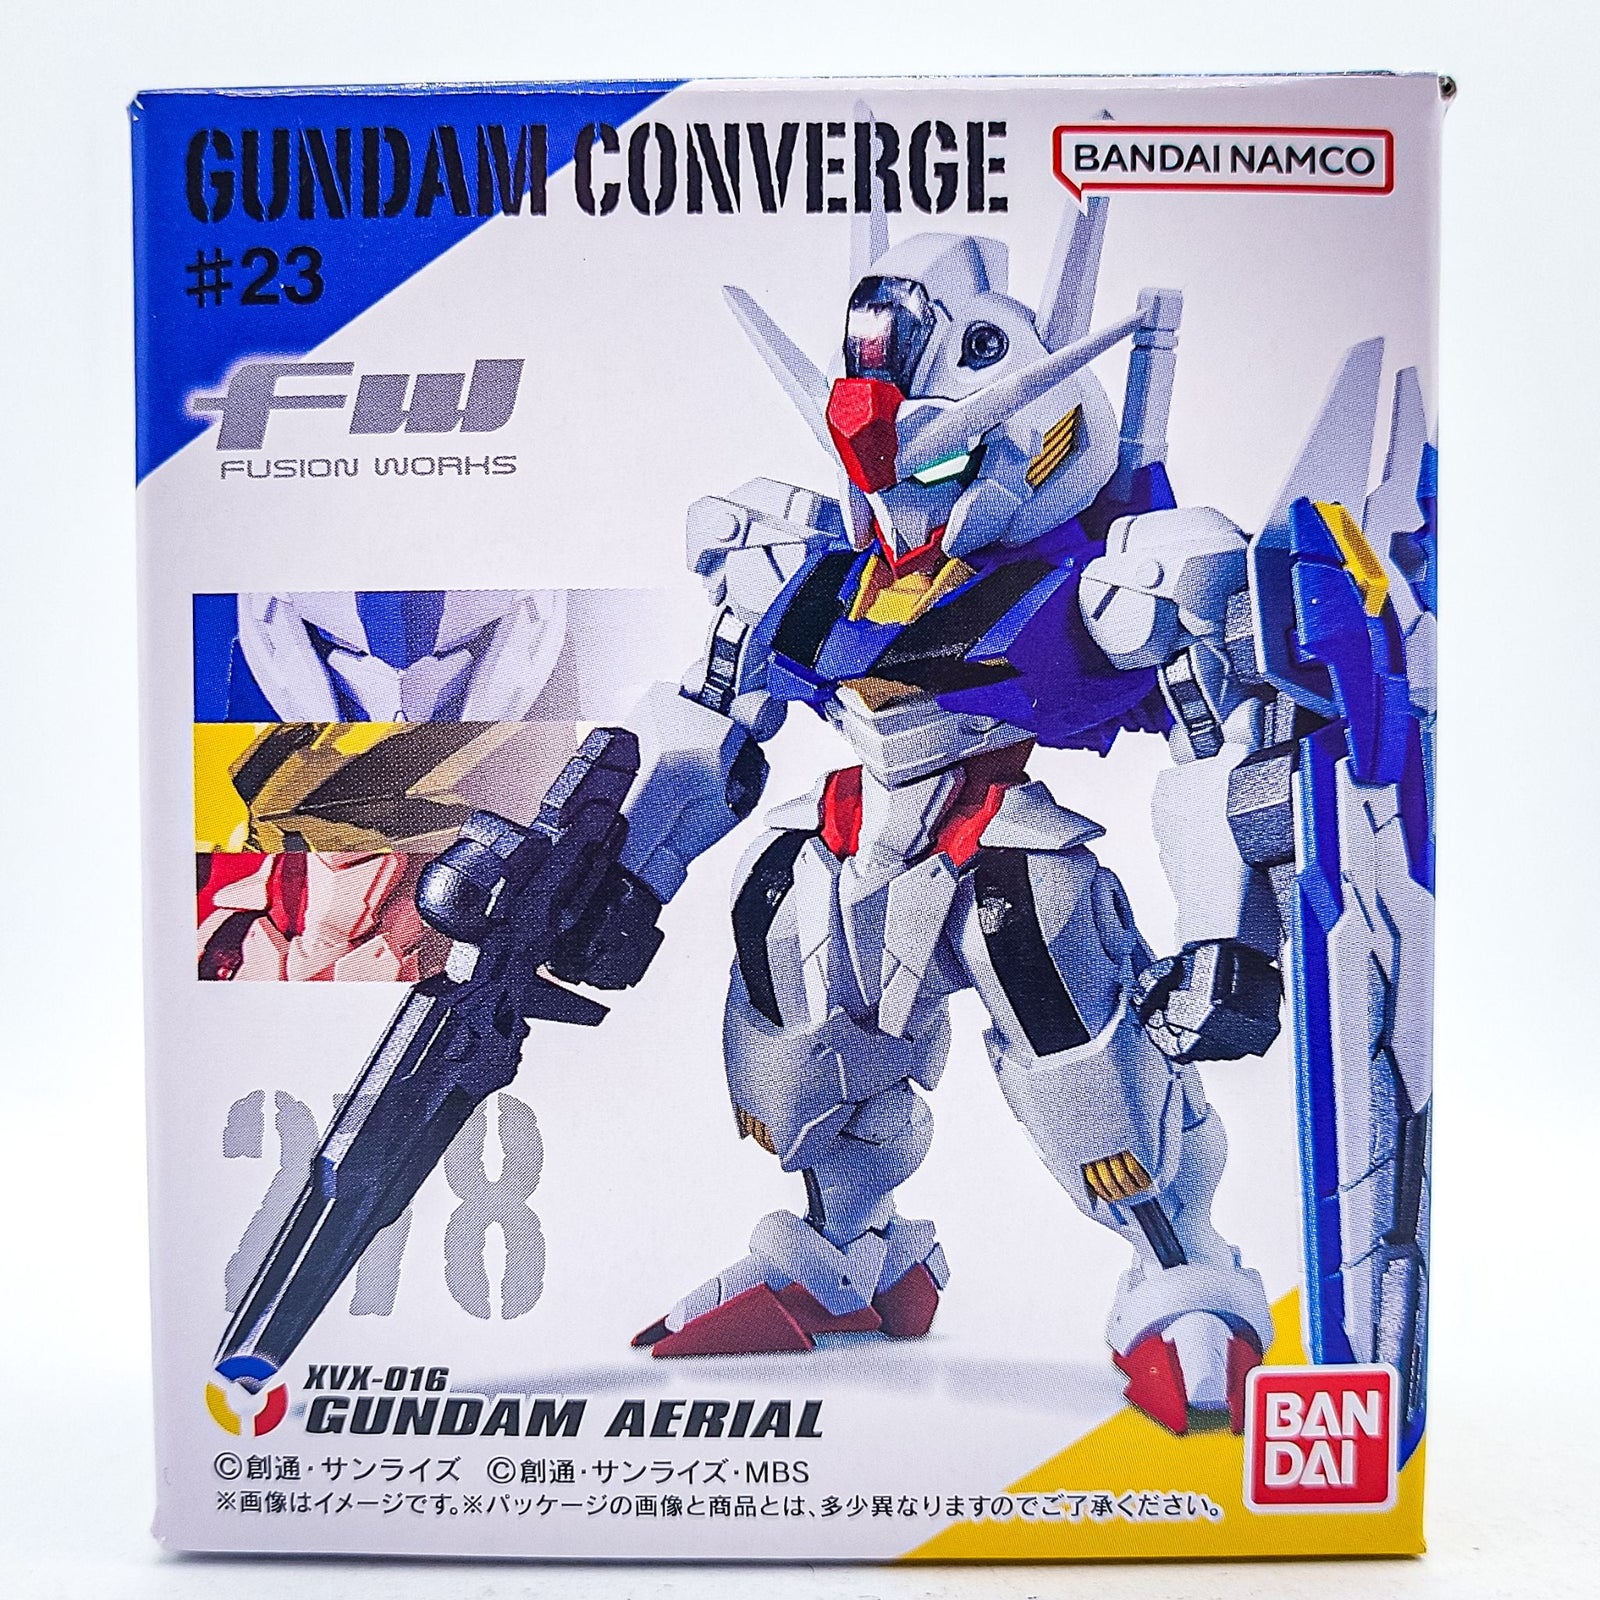 Gundam Converge #278 Gundam Aerial by Bandai - 1